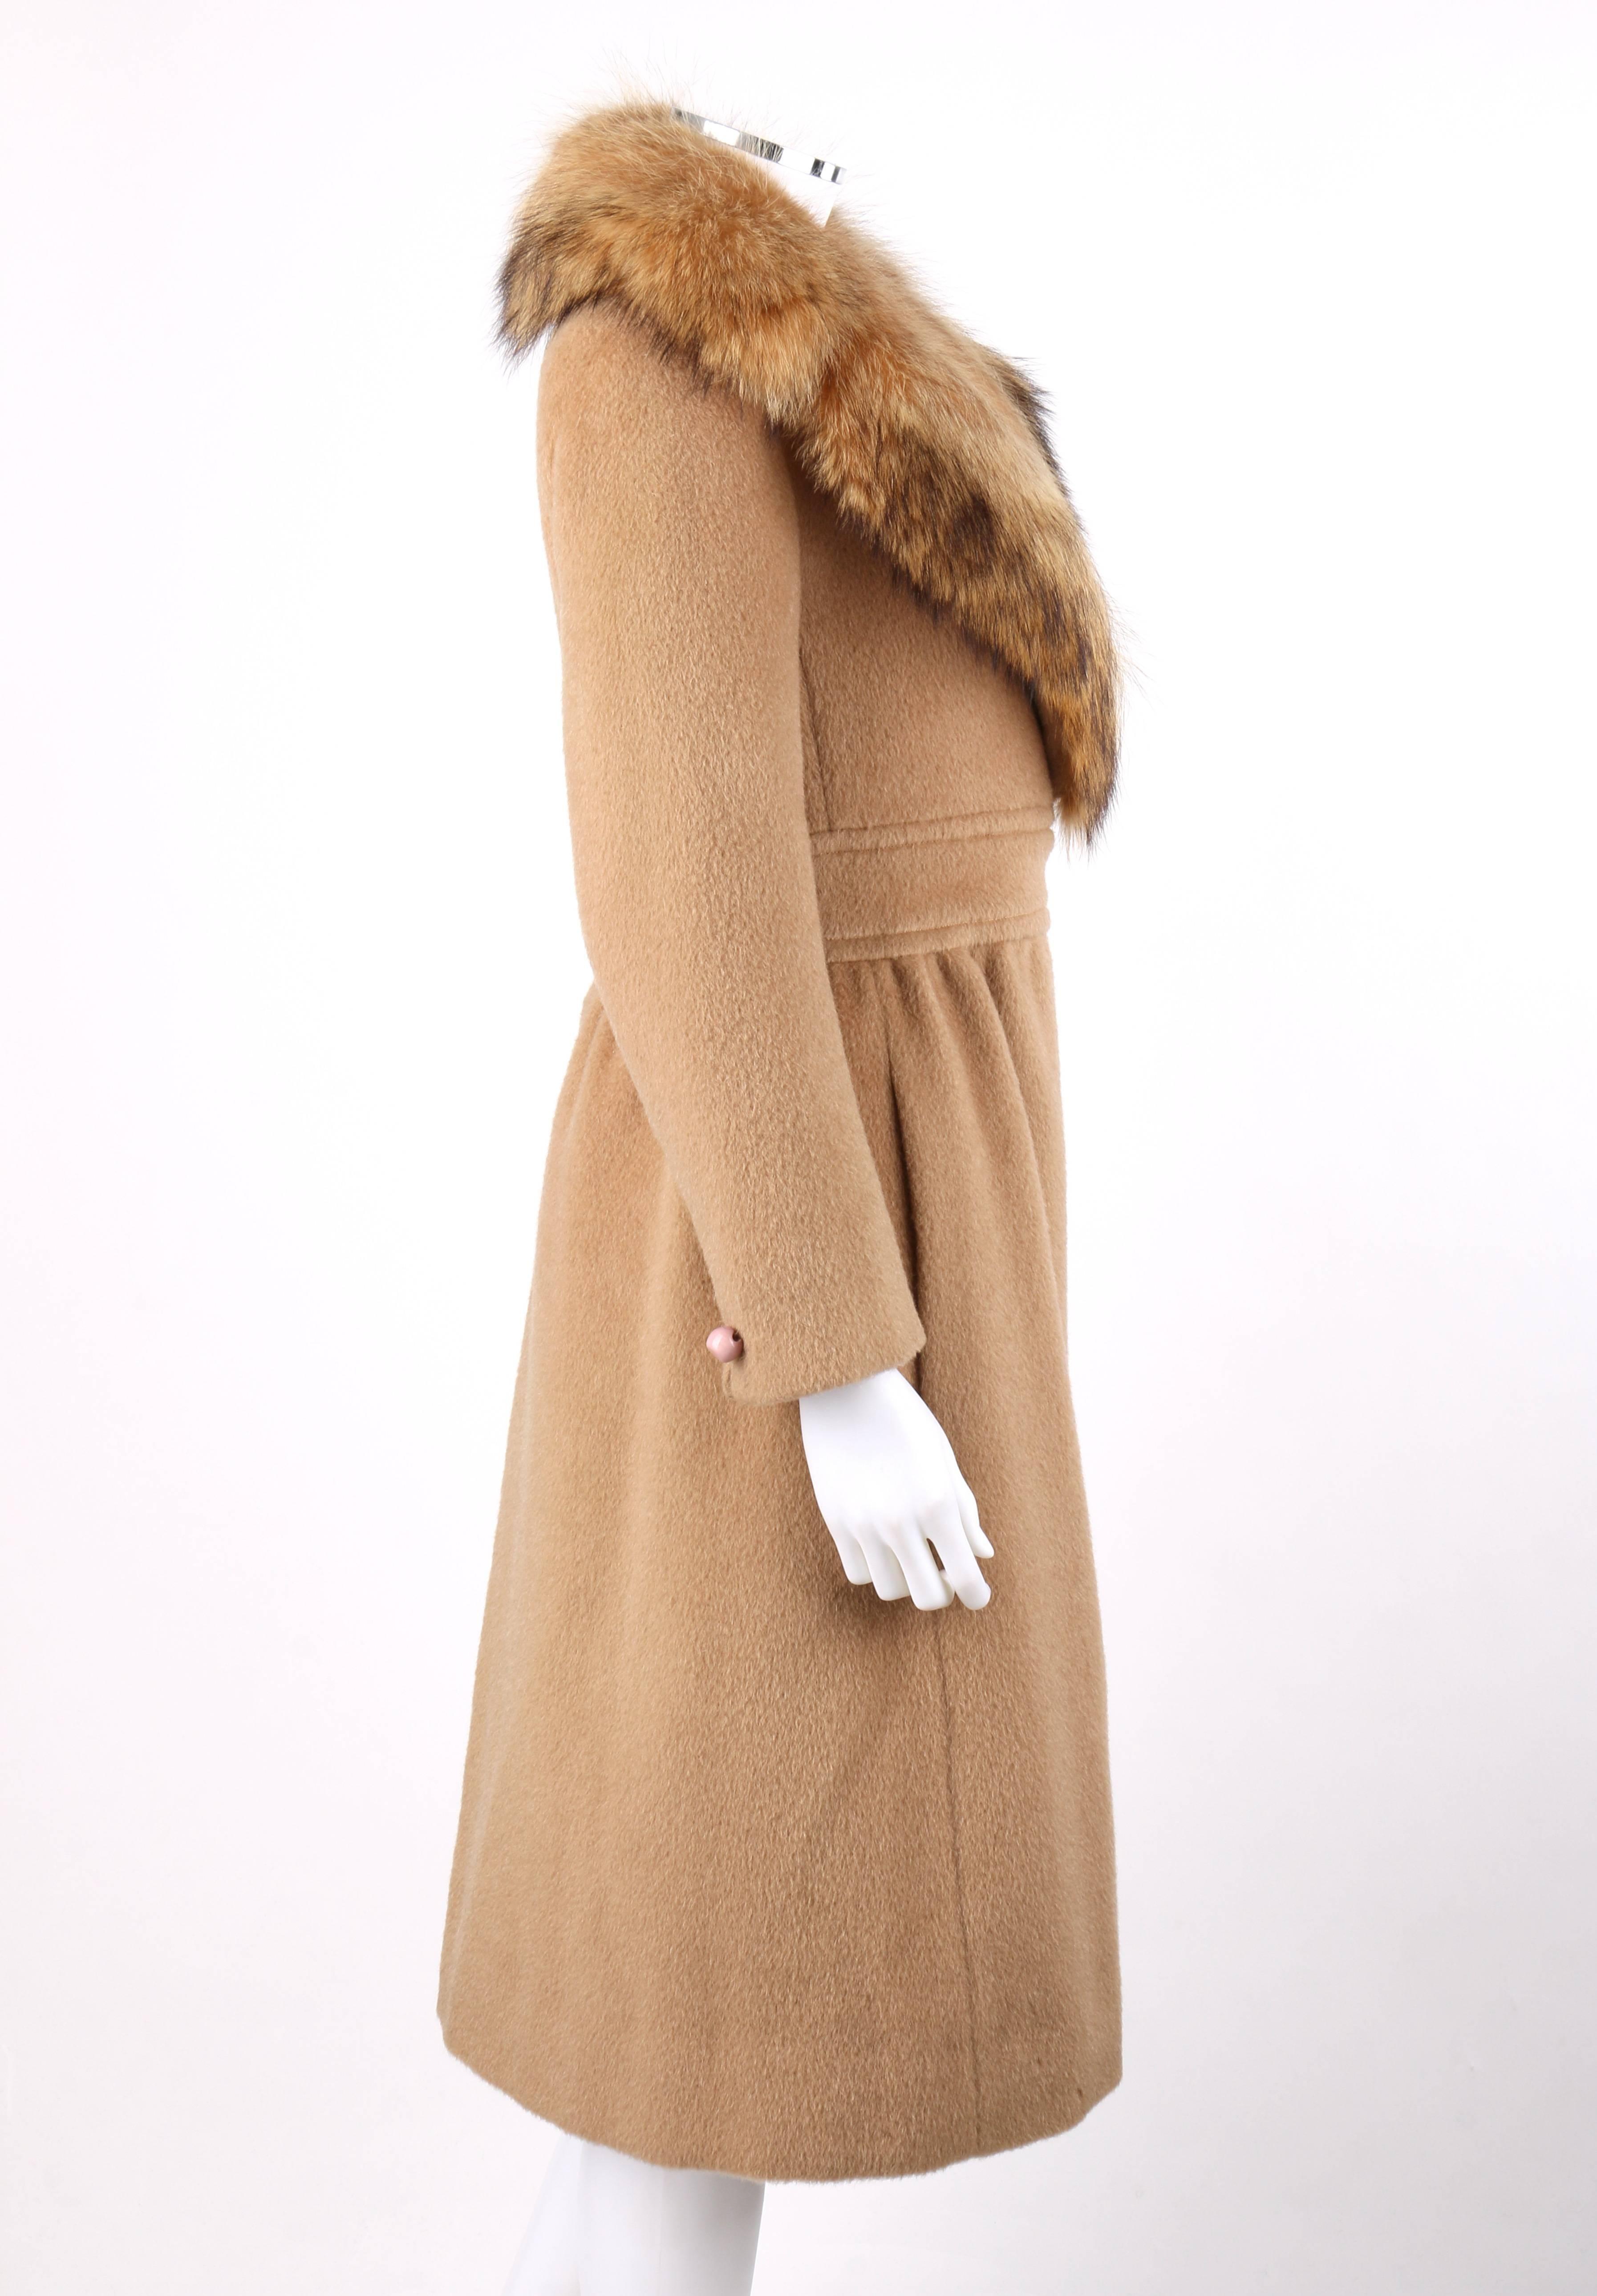 vintage coat with fur collar